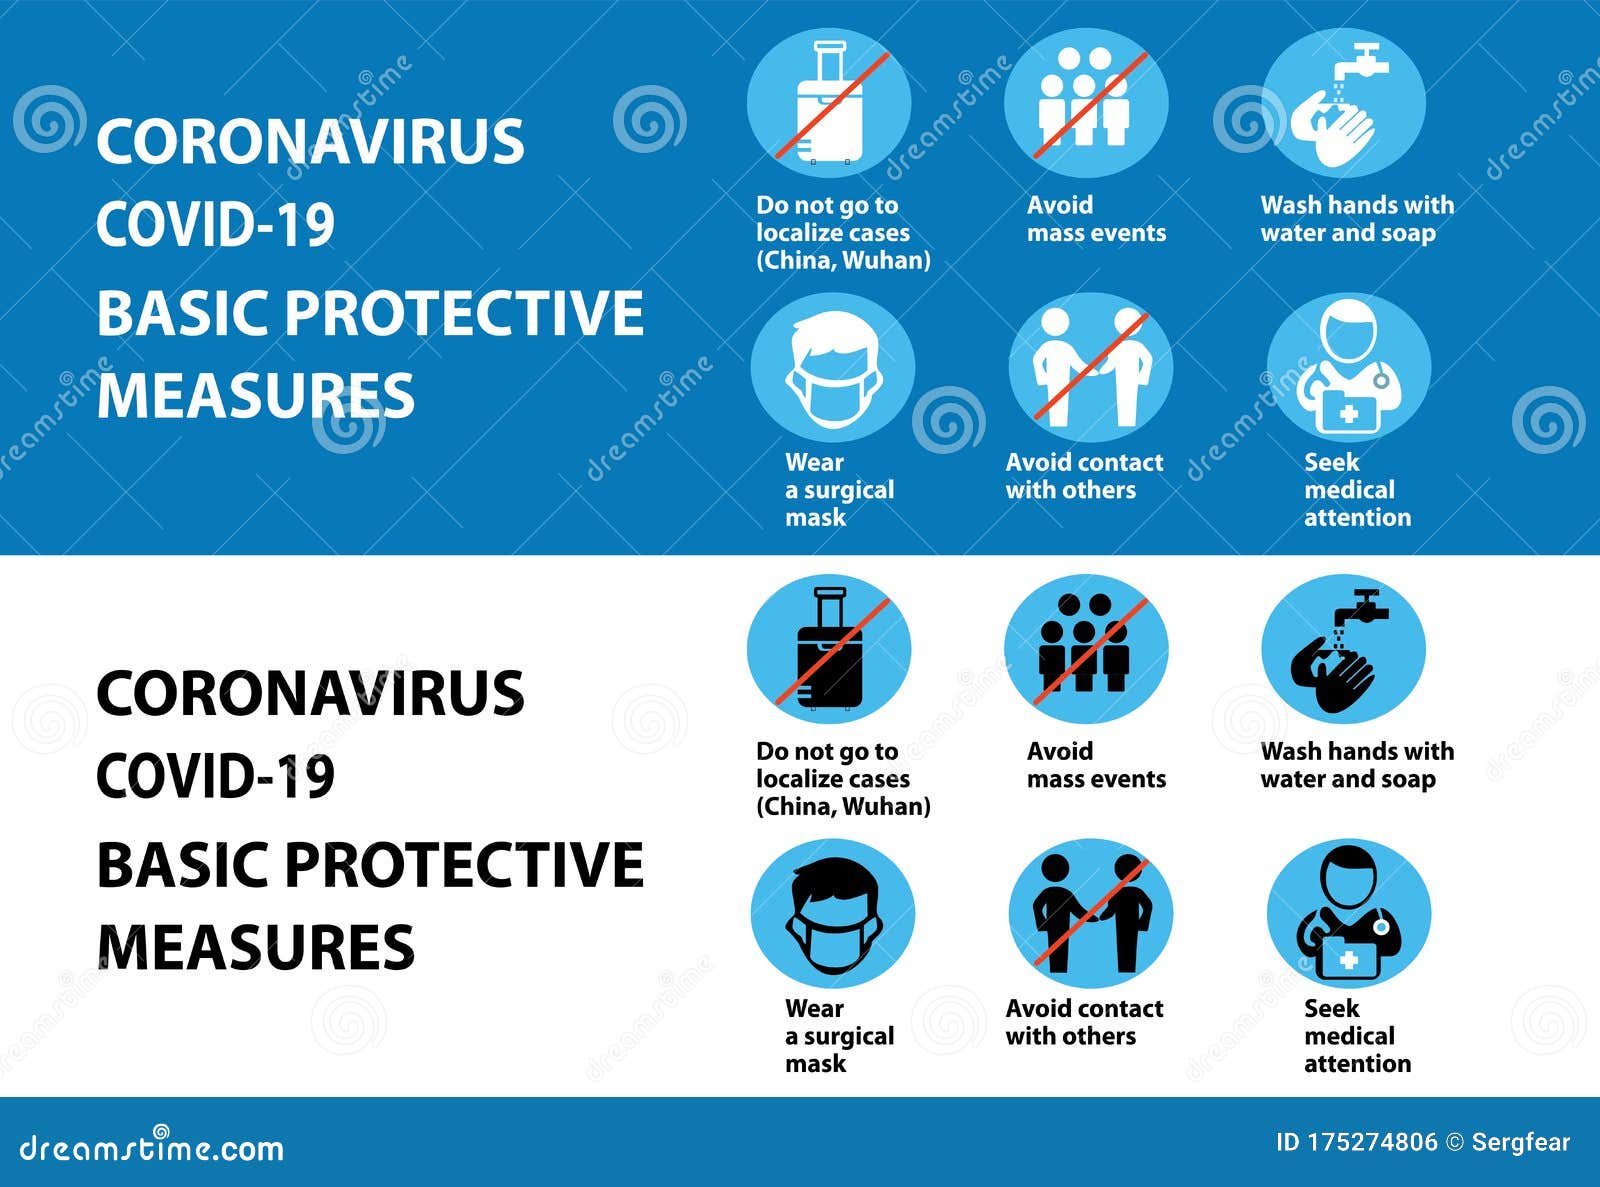 coronavirus covid-19 prevention tips, basic protection measures, how to prevent coronavirus.